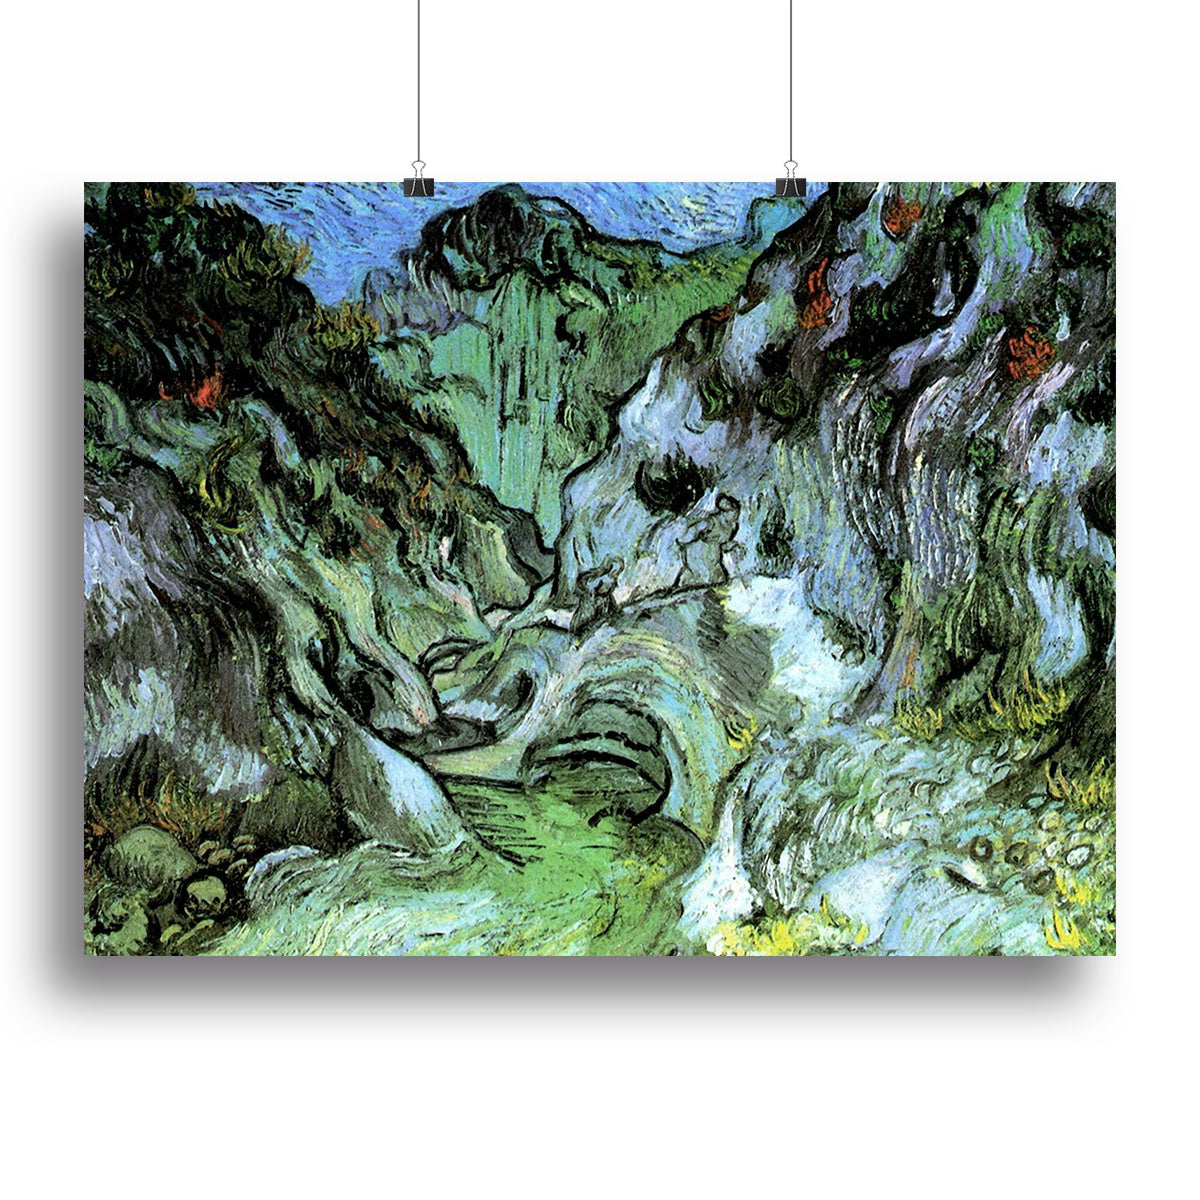 Les Peiroulets Ravine 2 by Van Gogh Canvas Print or Poster - Canvas Art Rocks - 2